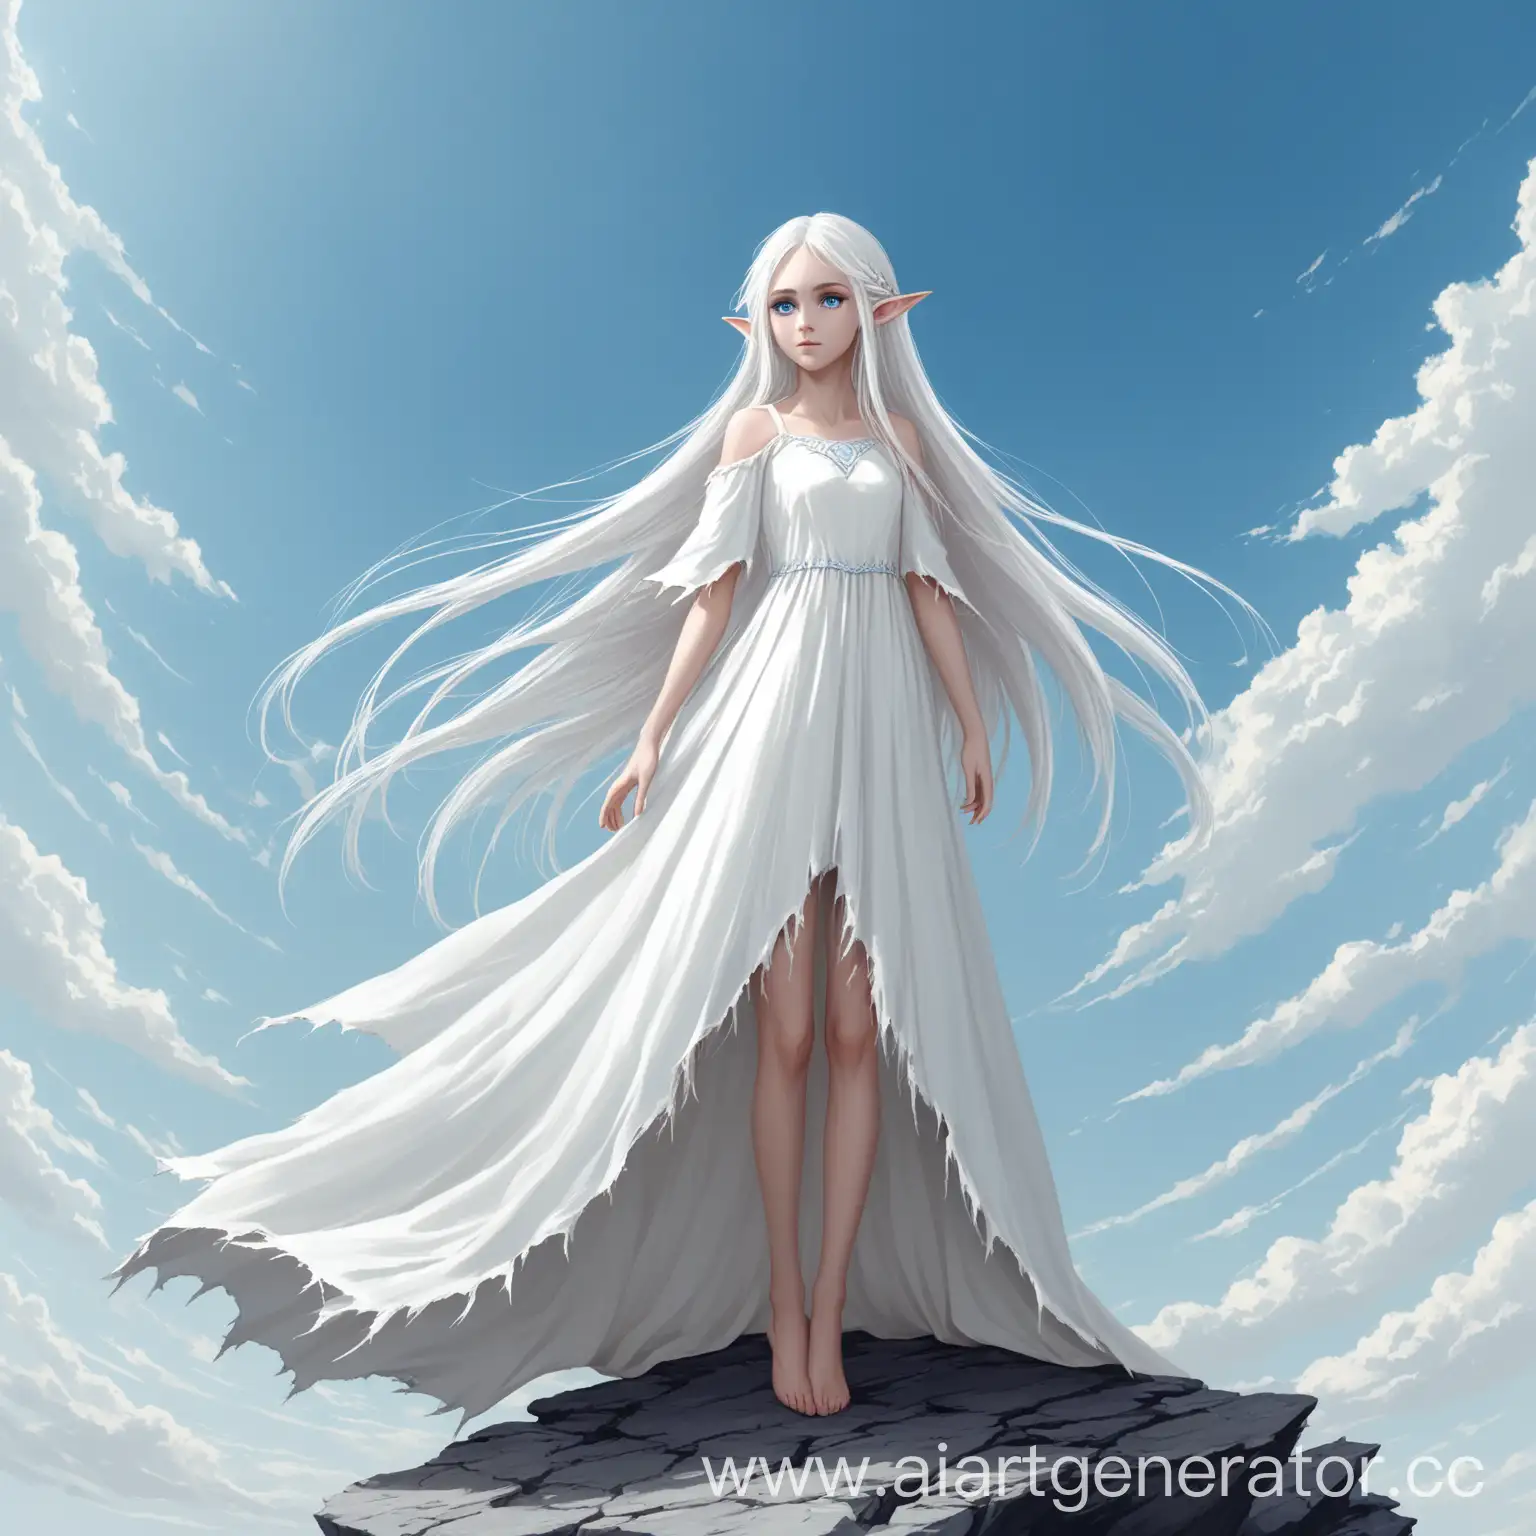 Enchanting-WhiteHaired-Elf-Standing-Tall-Against-Azure-Sky